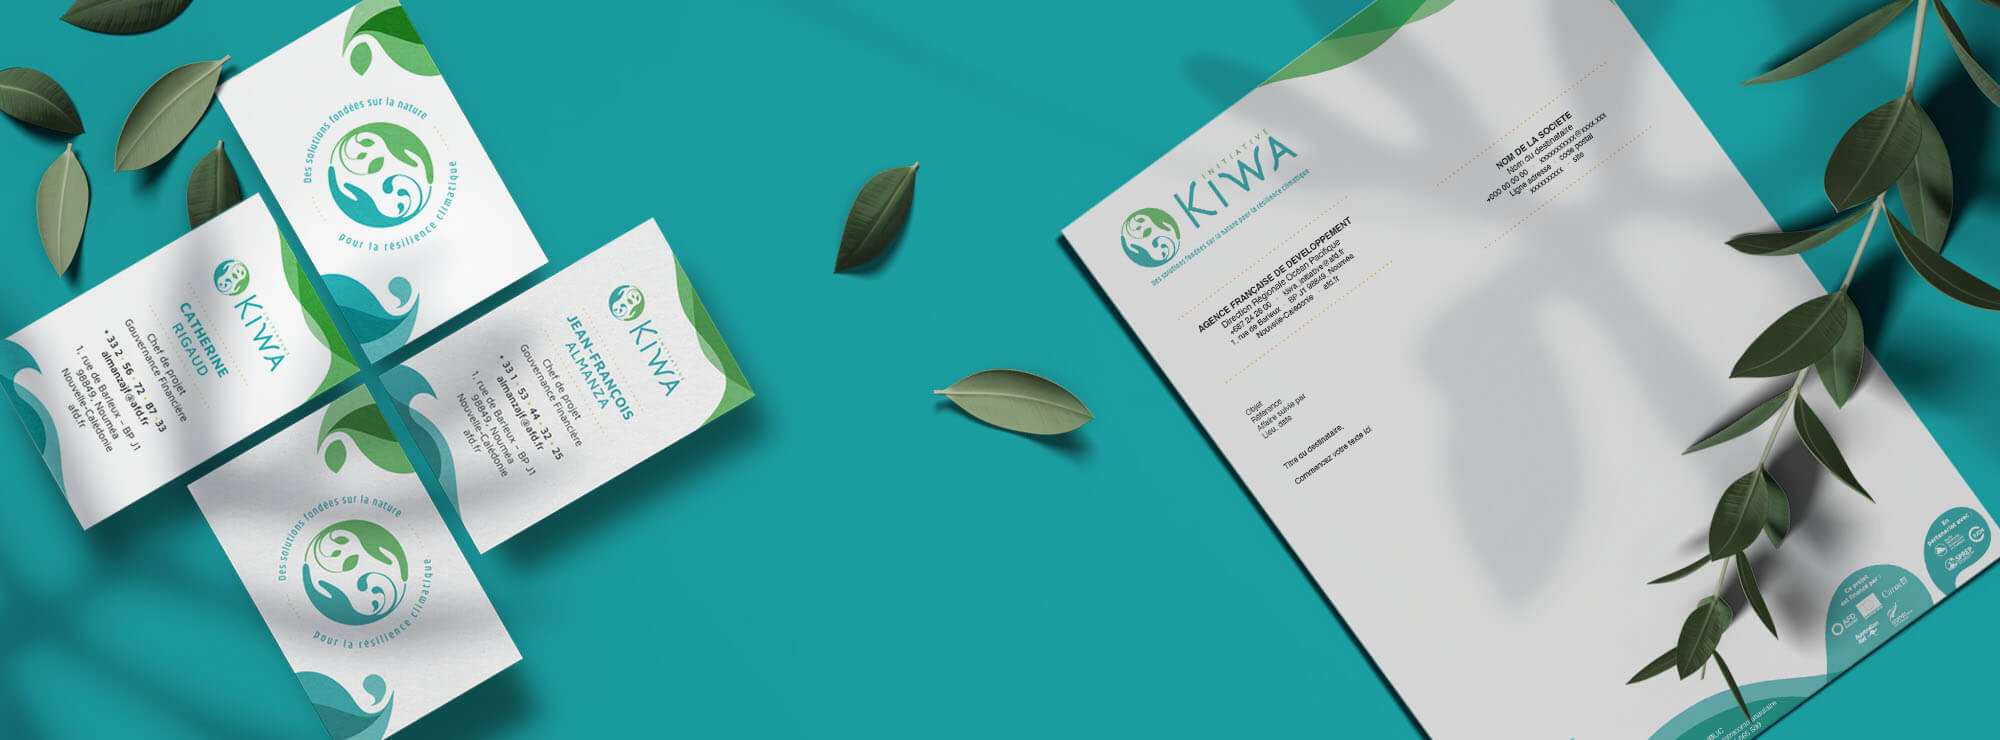 03 kiwa business cards papeterie nature.jpg